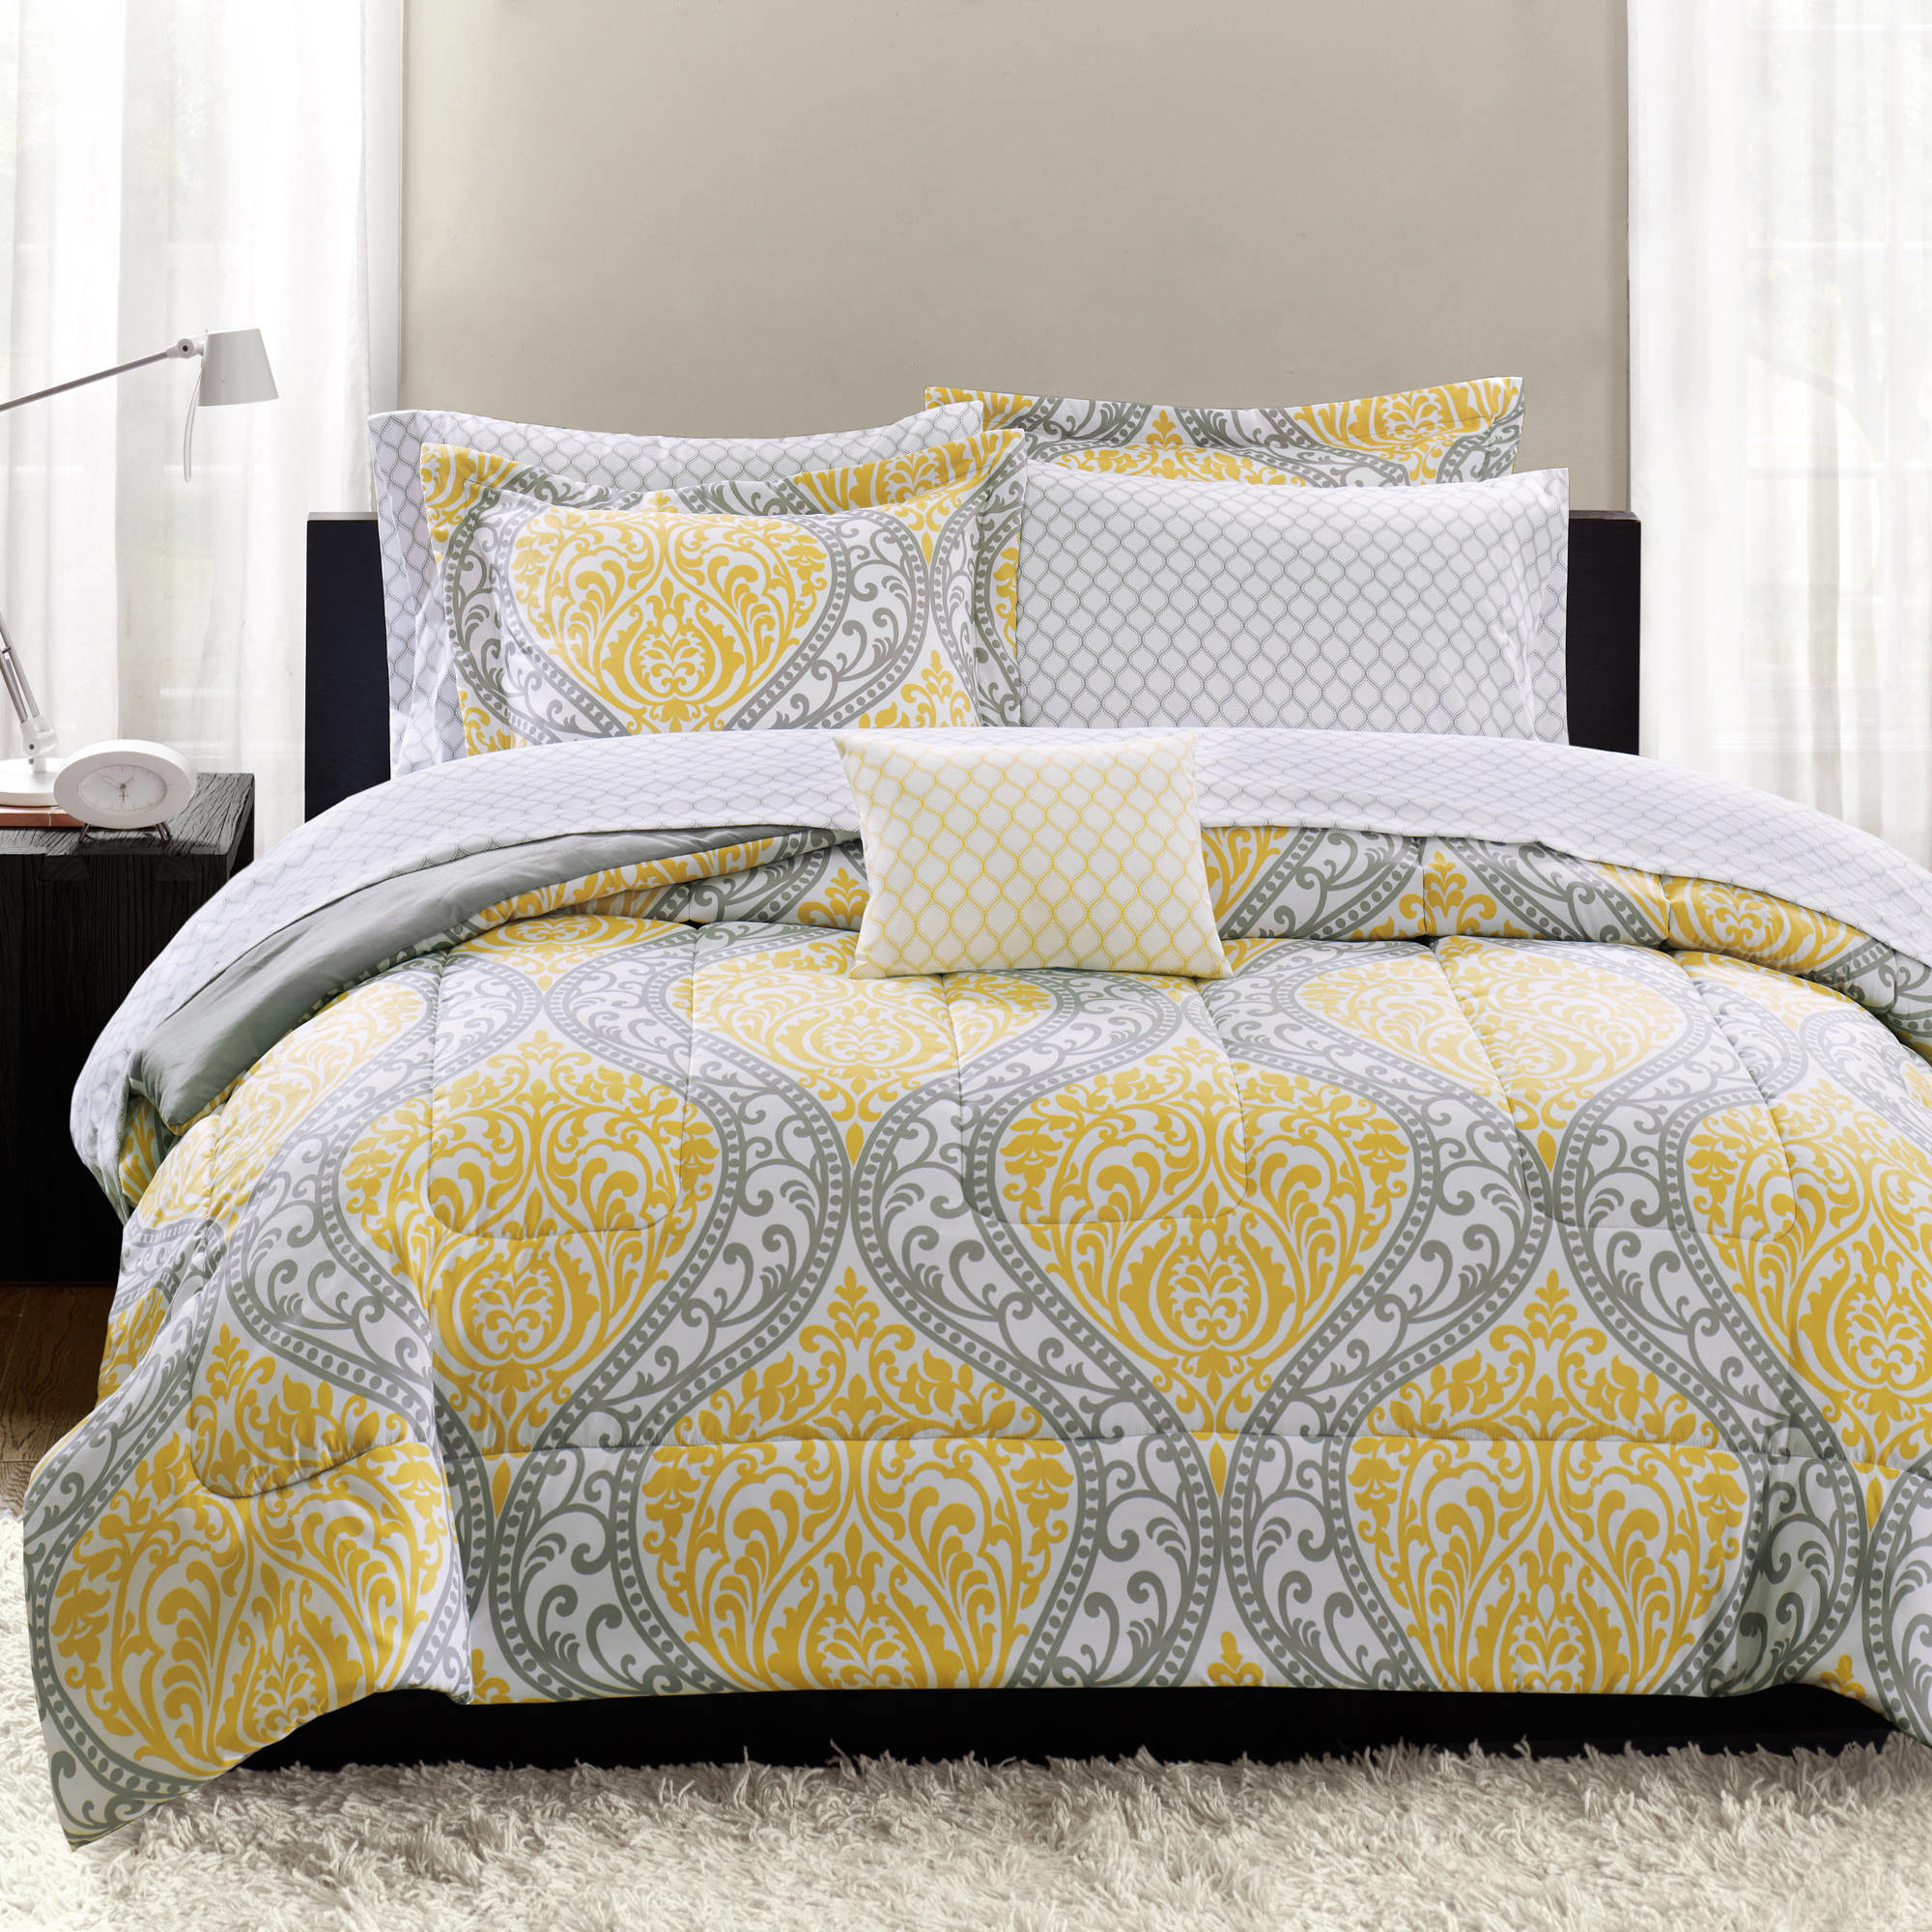 2000x2000 Walmart Queen Sheet Sets Emojipals Bed In A Bag Bedding Set Online Only  Walmart Home Design